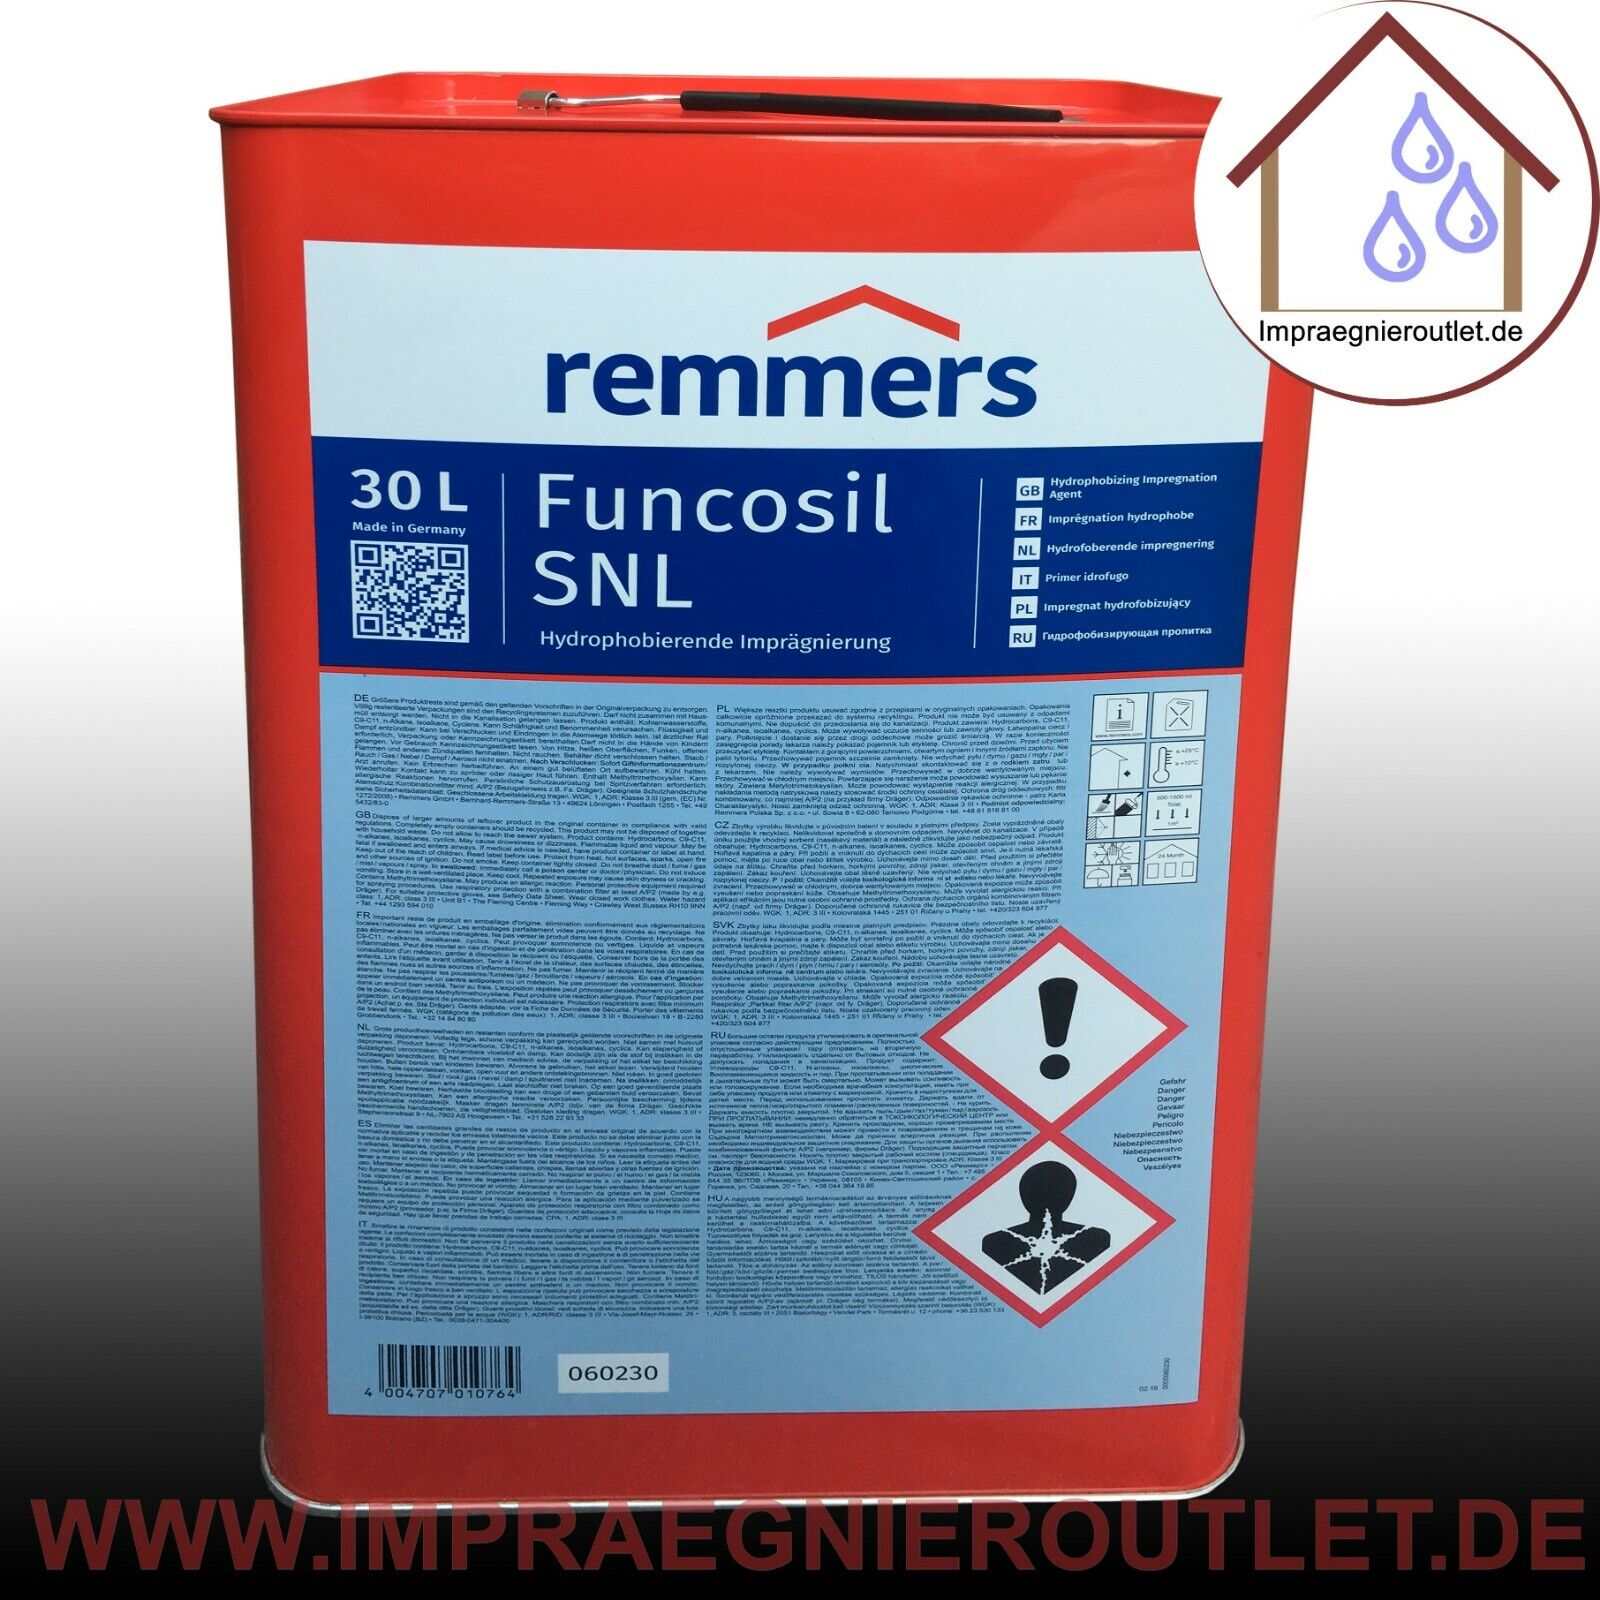 Remmers Funcosil SNL Fassade Hydrophobiermittel - 30 L - mehr als 100 verkauft